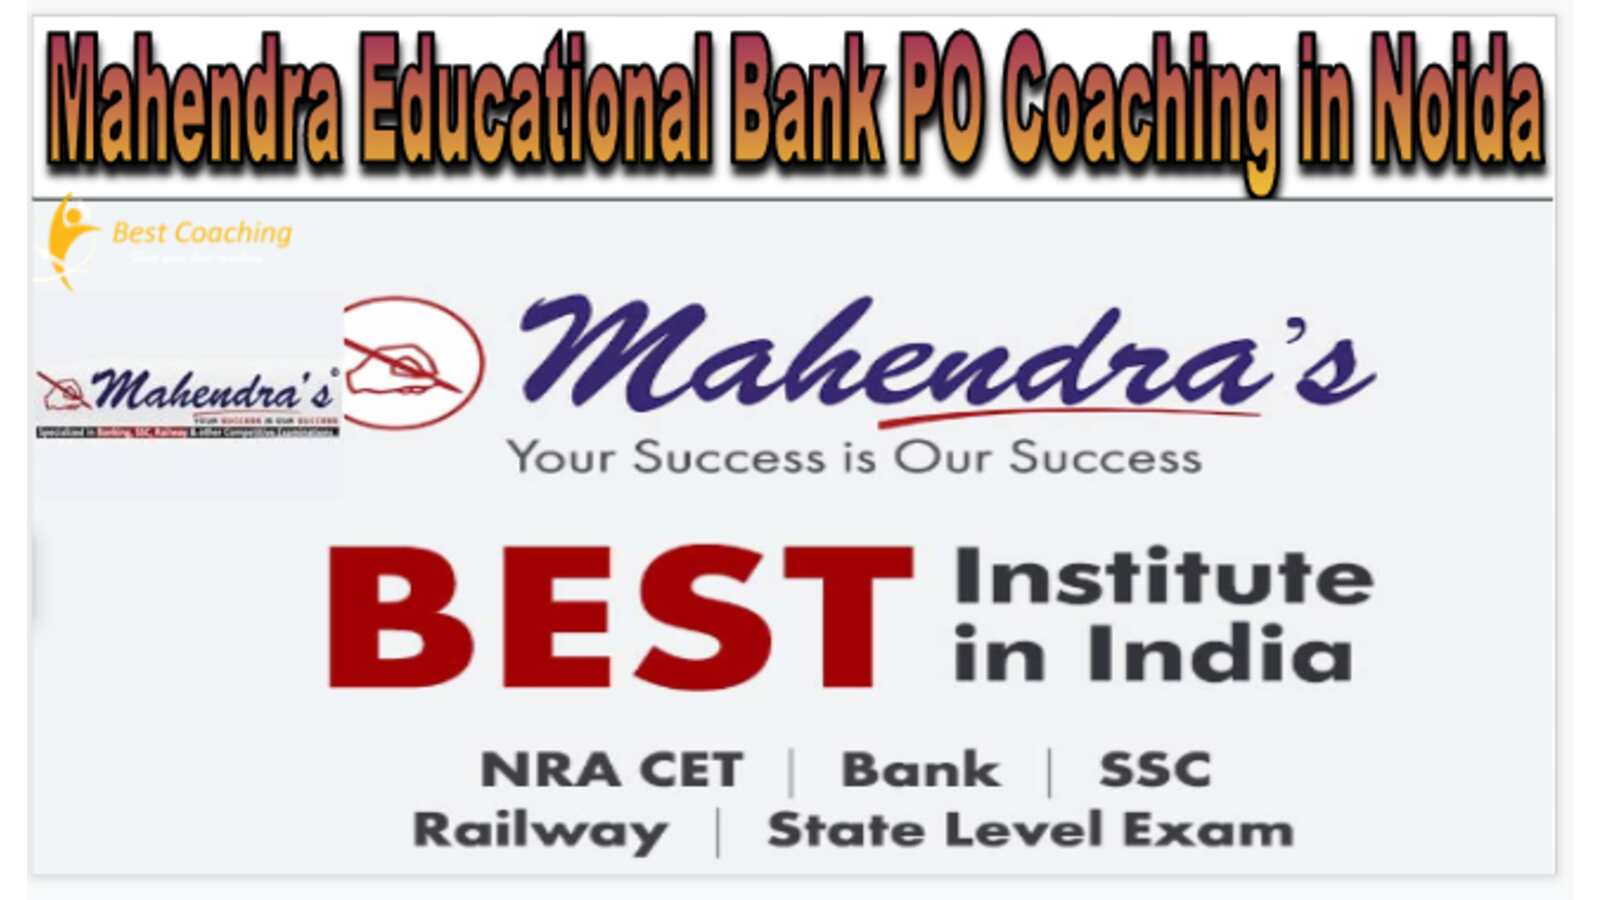 Mahendra Educational Bank PO Coaching in Noida